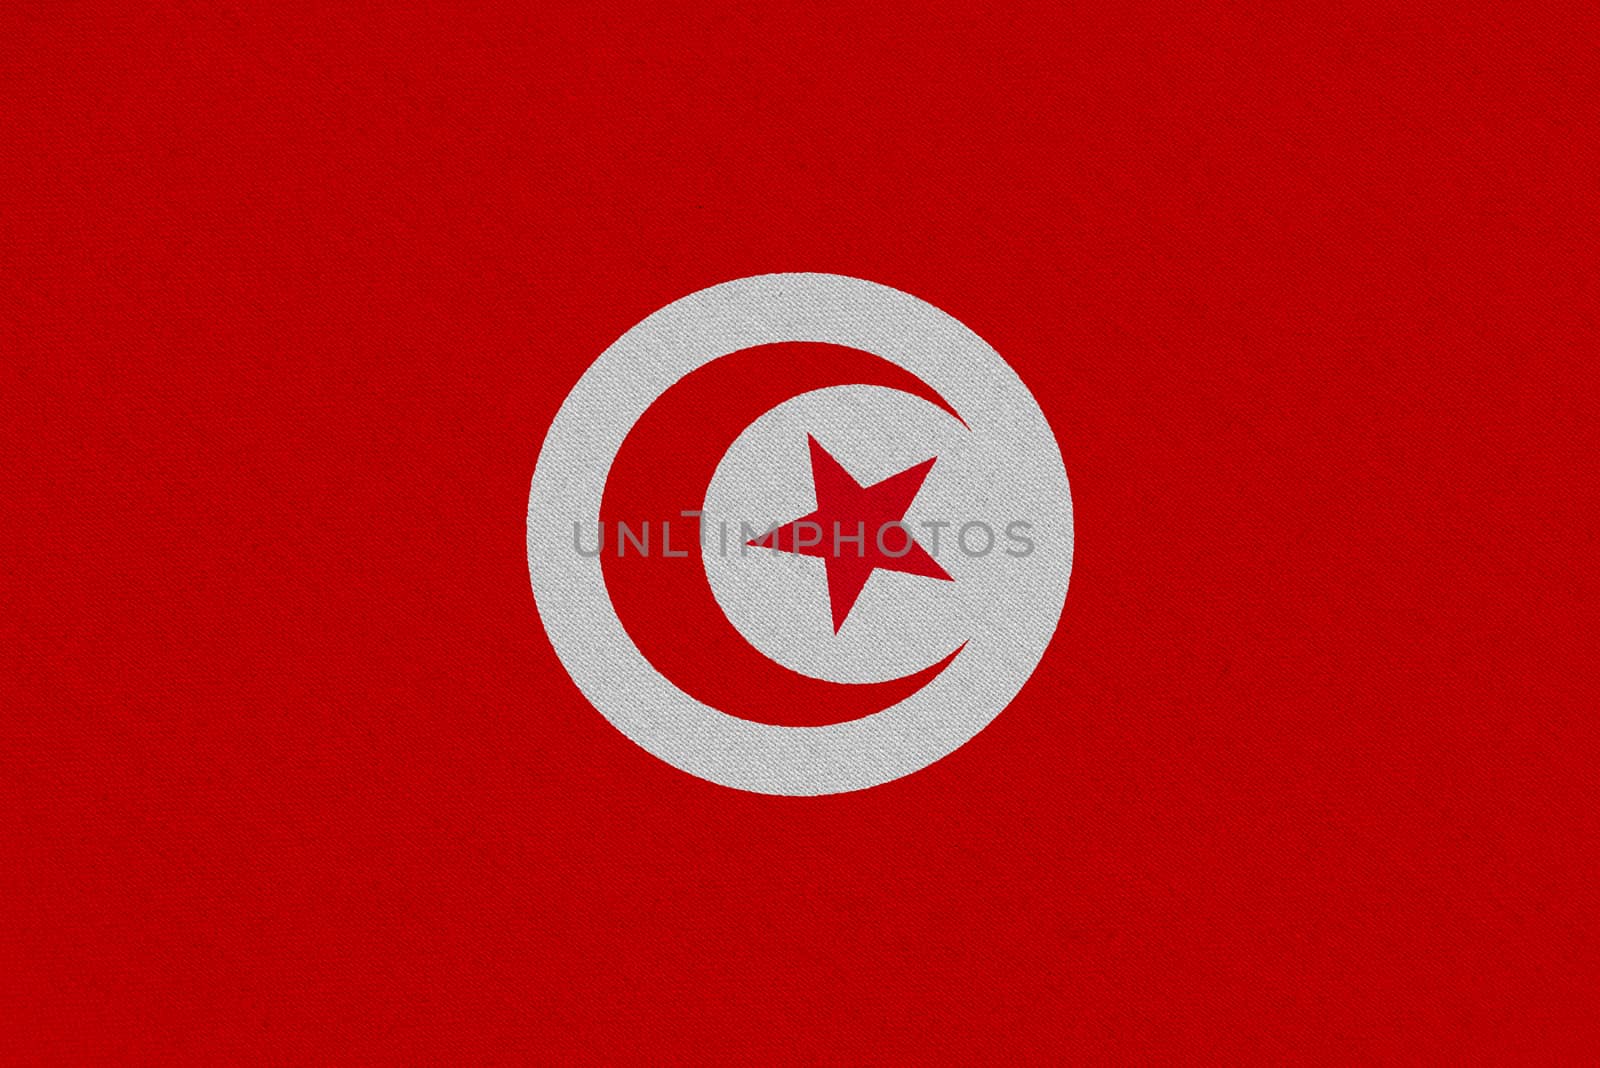 Tunisia fabric flag. Patriotic background. National flag of Tunisia